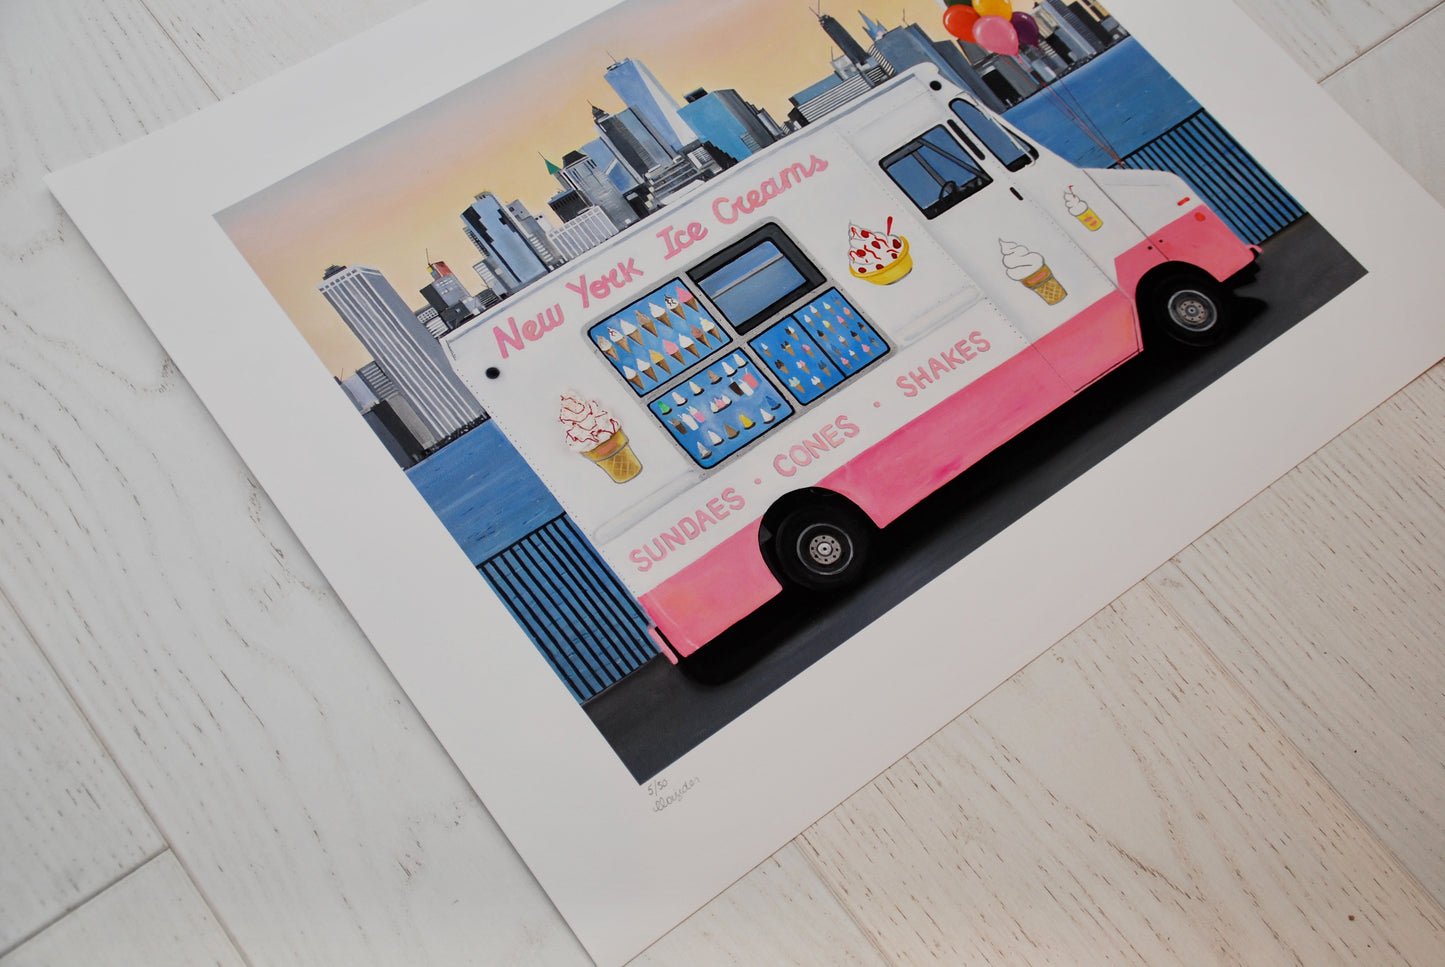 New York Ice Cream Truck, by Emma Loizides